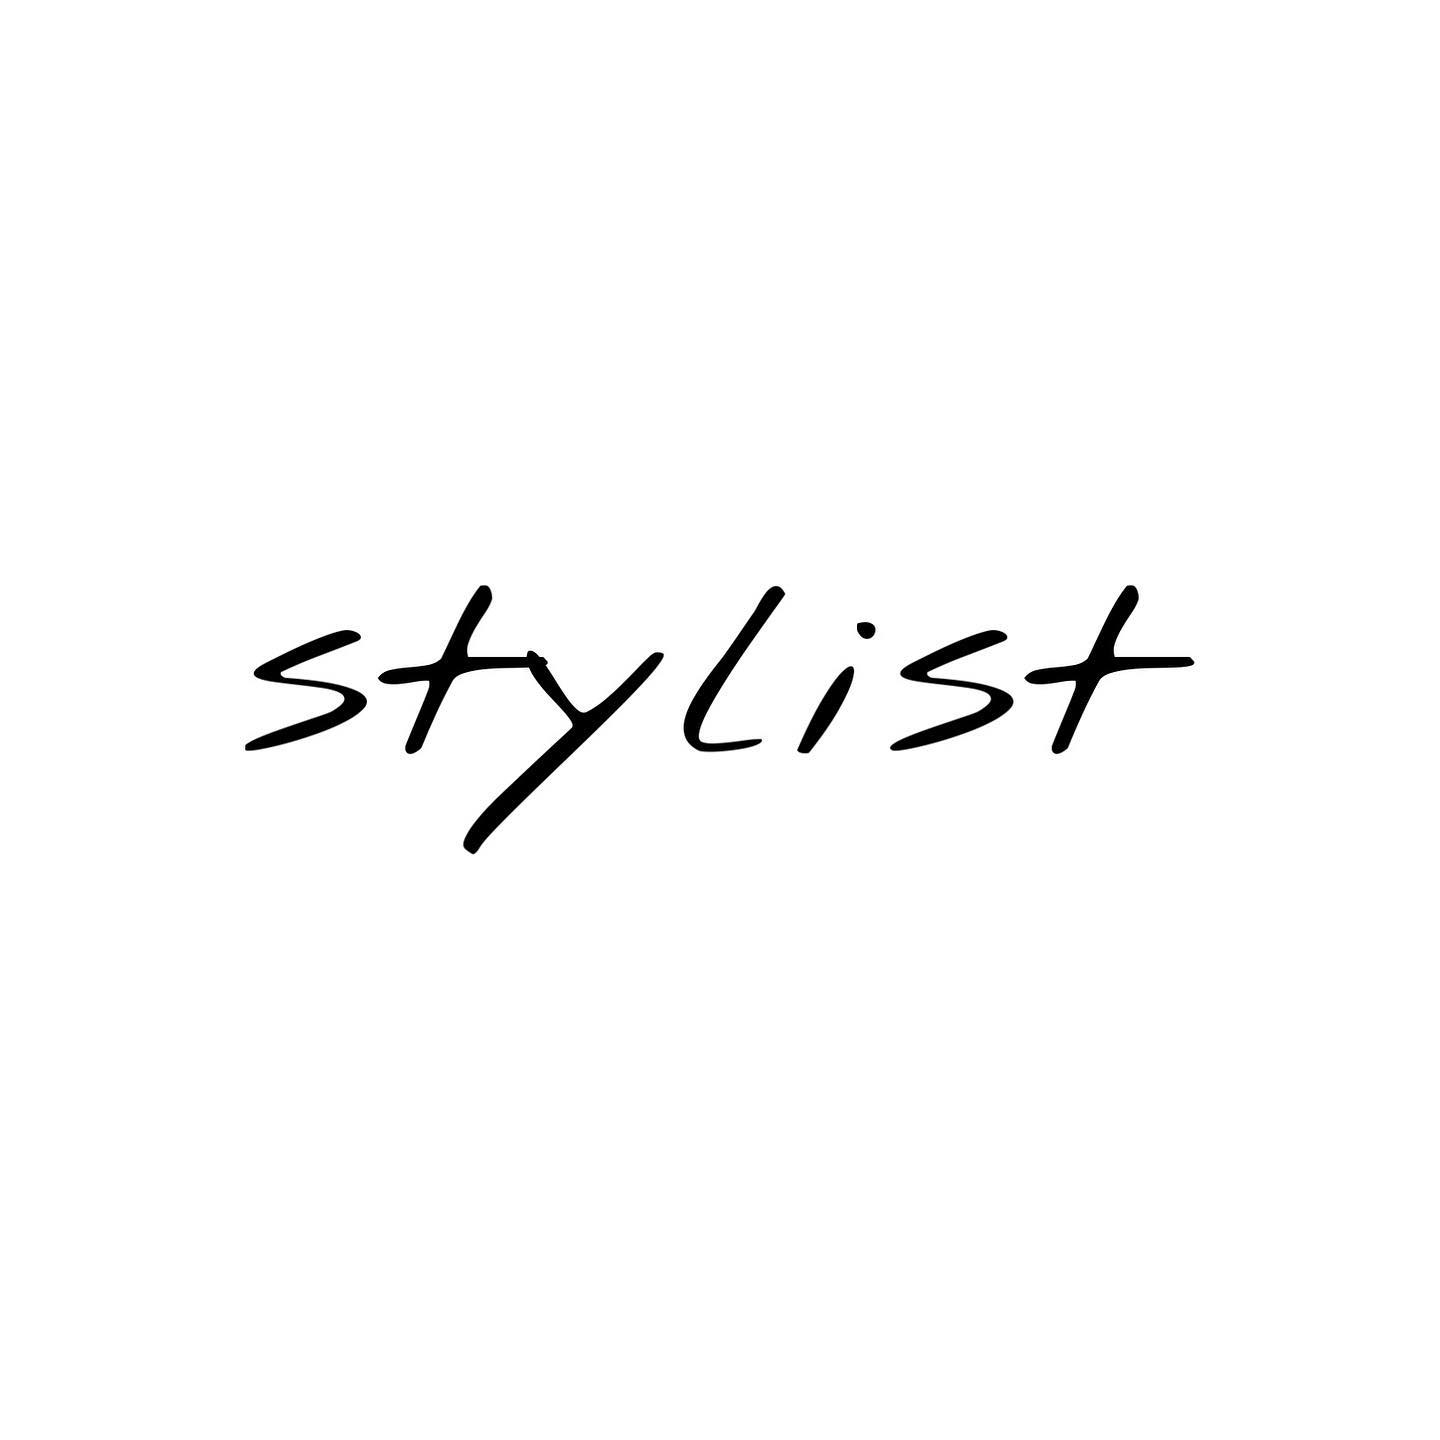 stylist ️